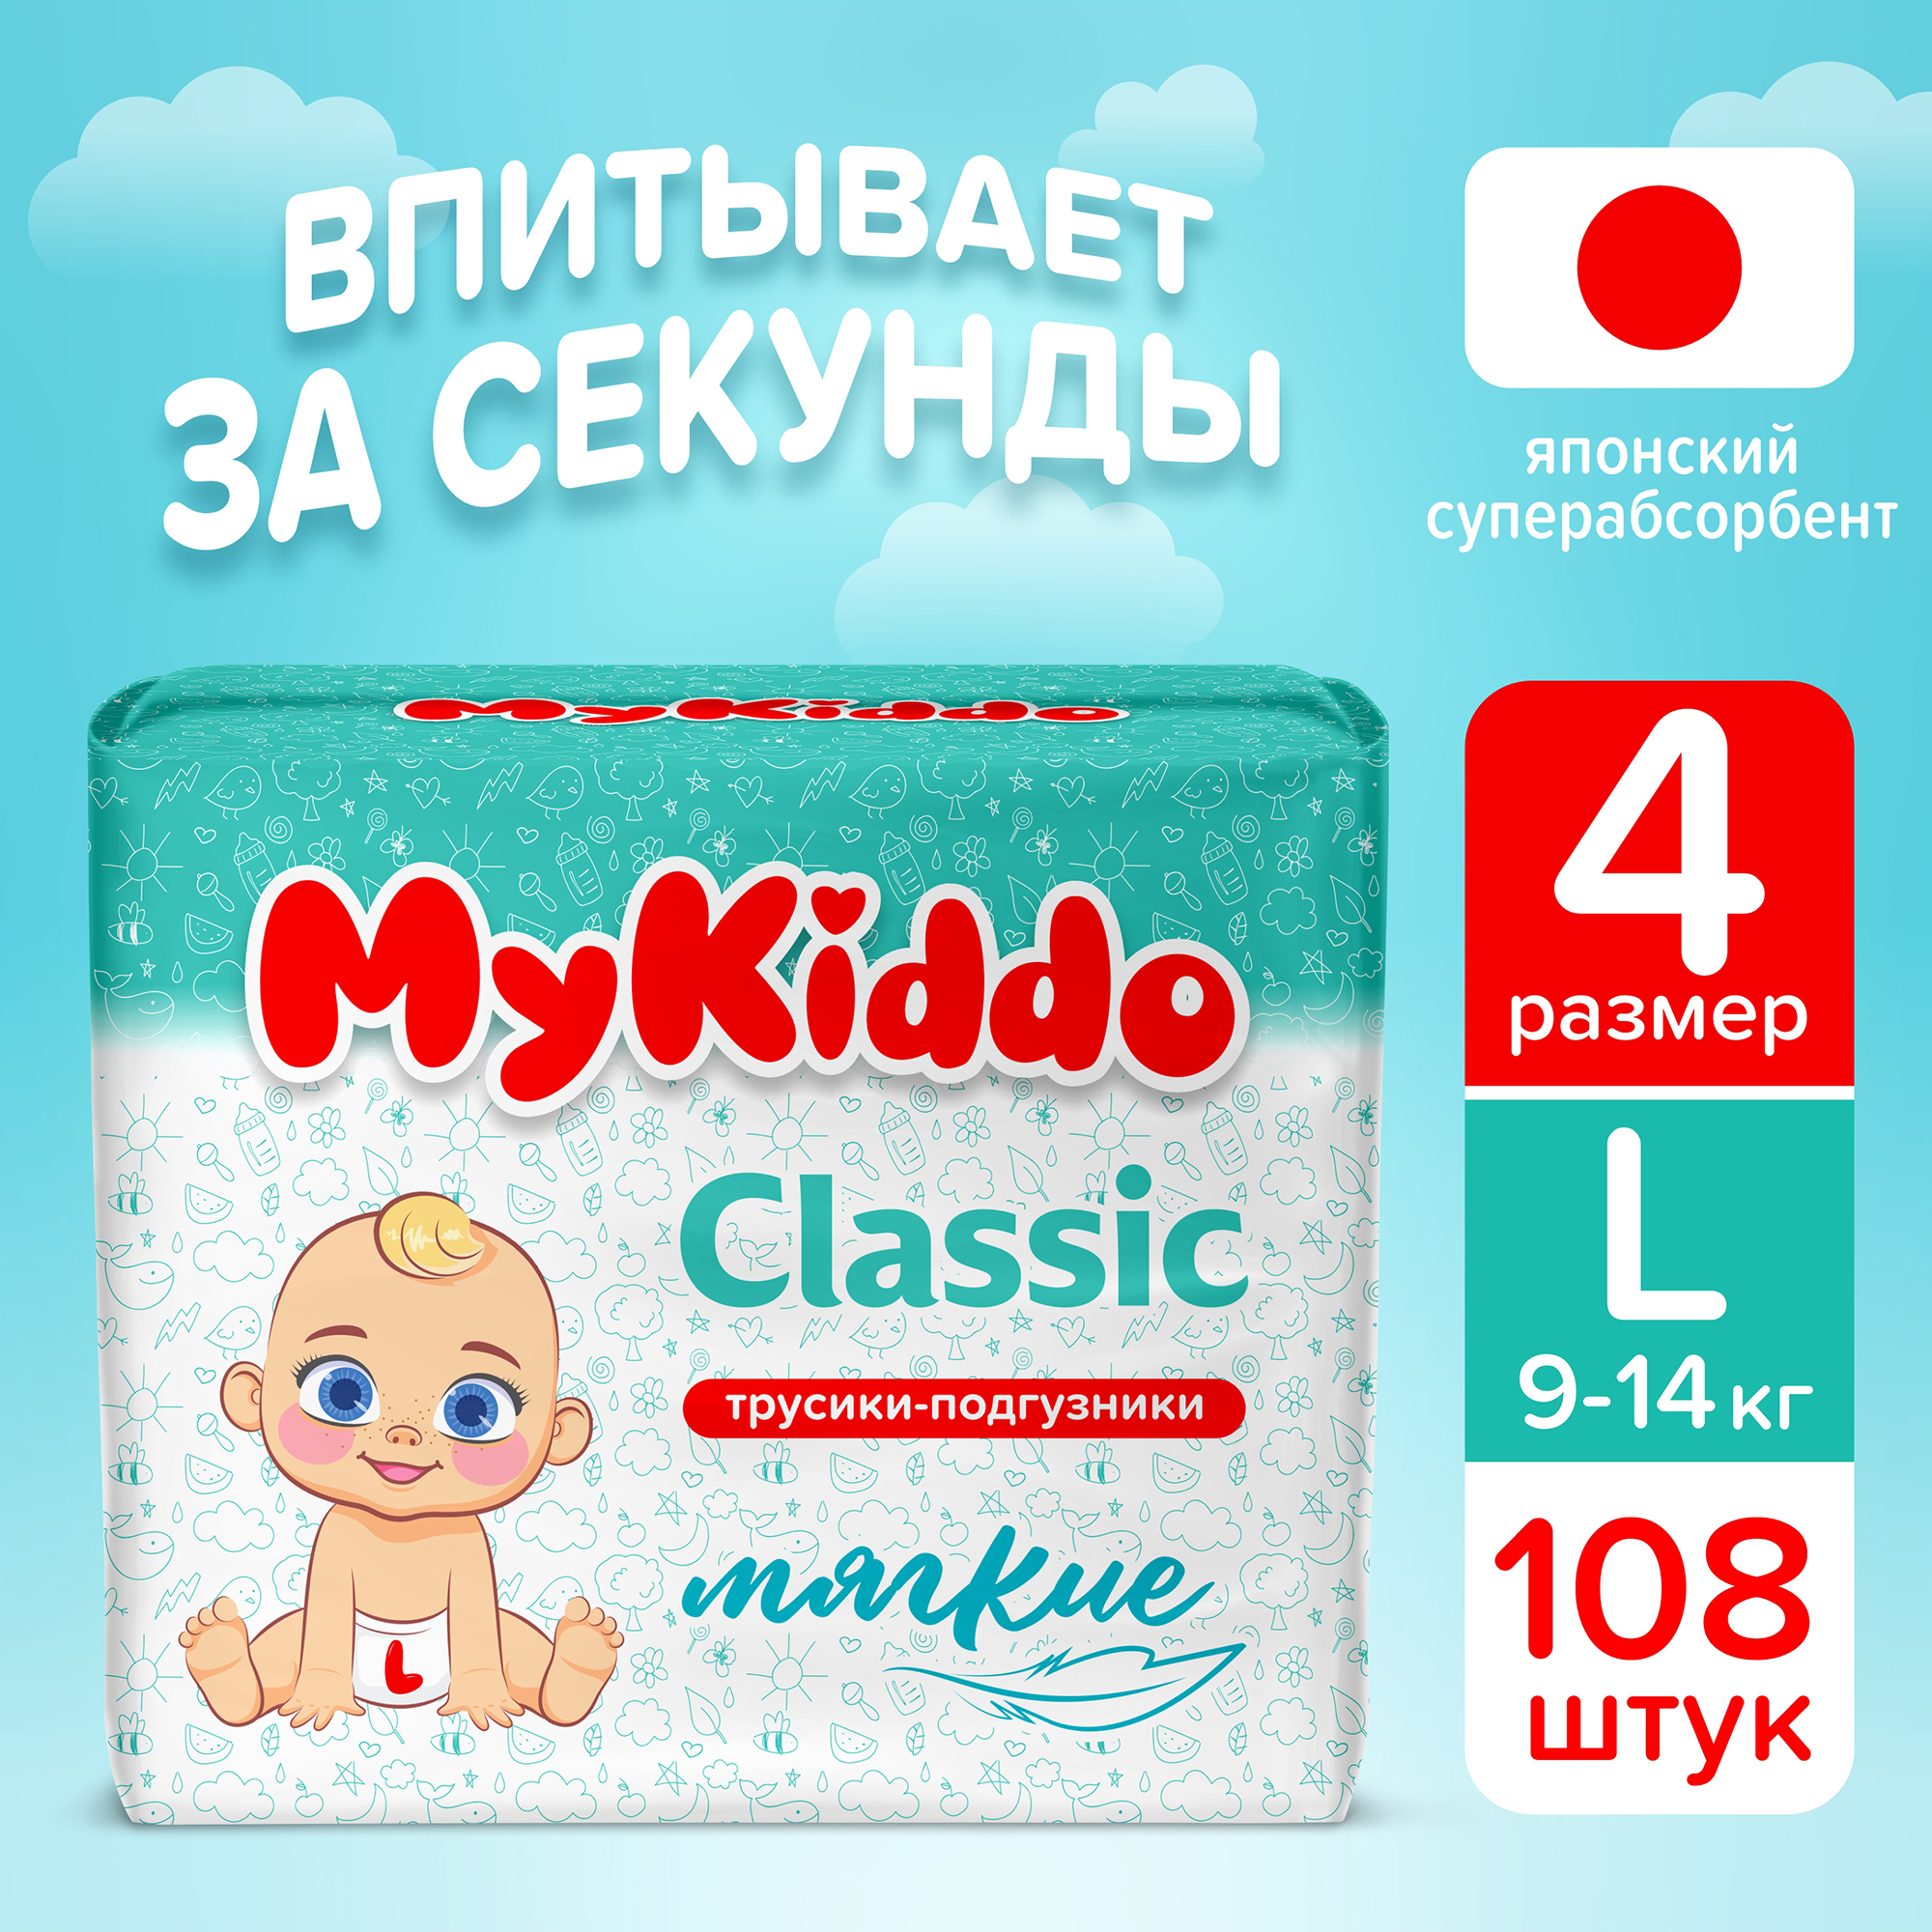 Подгузники-трусики для детей MyKiddo Classic L 108 шт. 3 уп. x 36 шт. трусики для детей bella baby happy midi по 48 шт